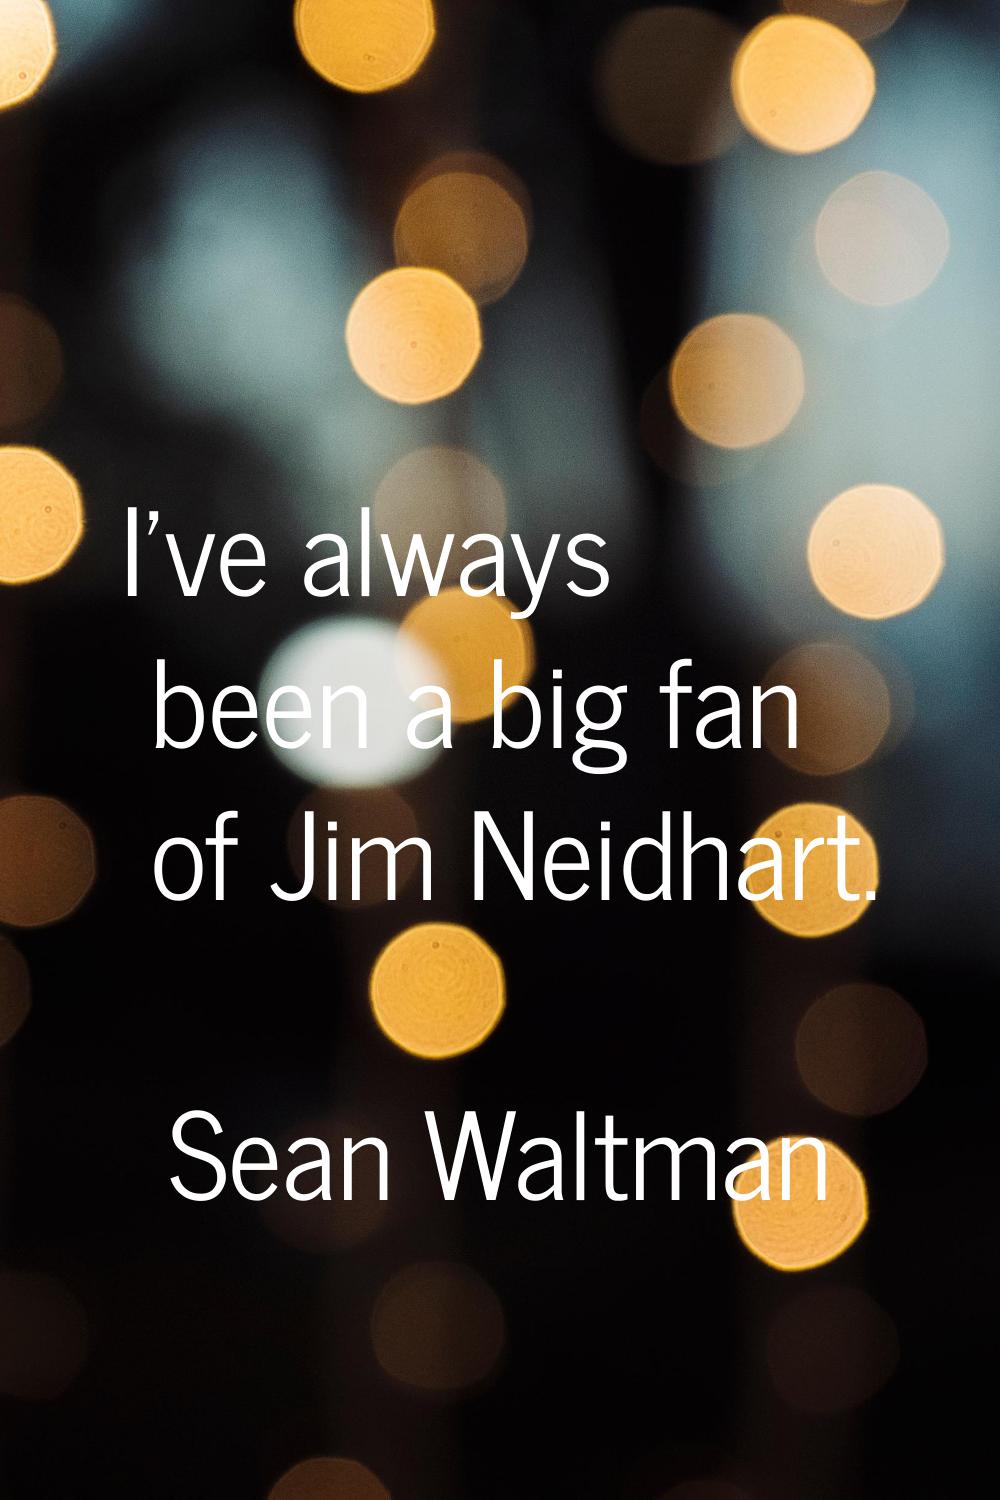 I've always been a big fan of Jim Neidhart.